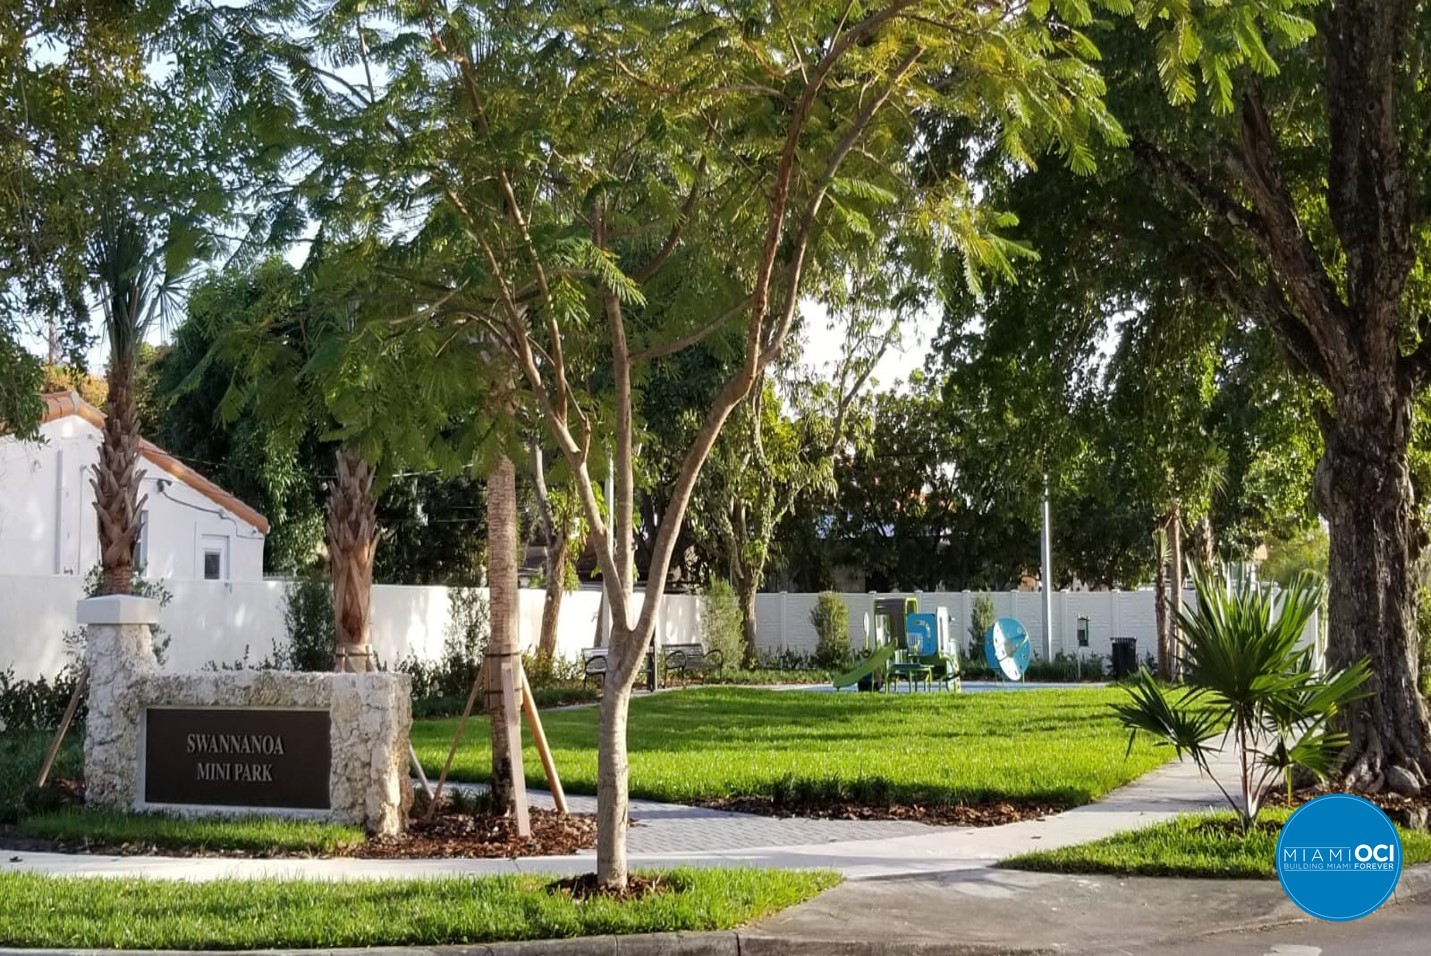 Office of Capital Improvements - Miami